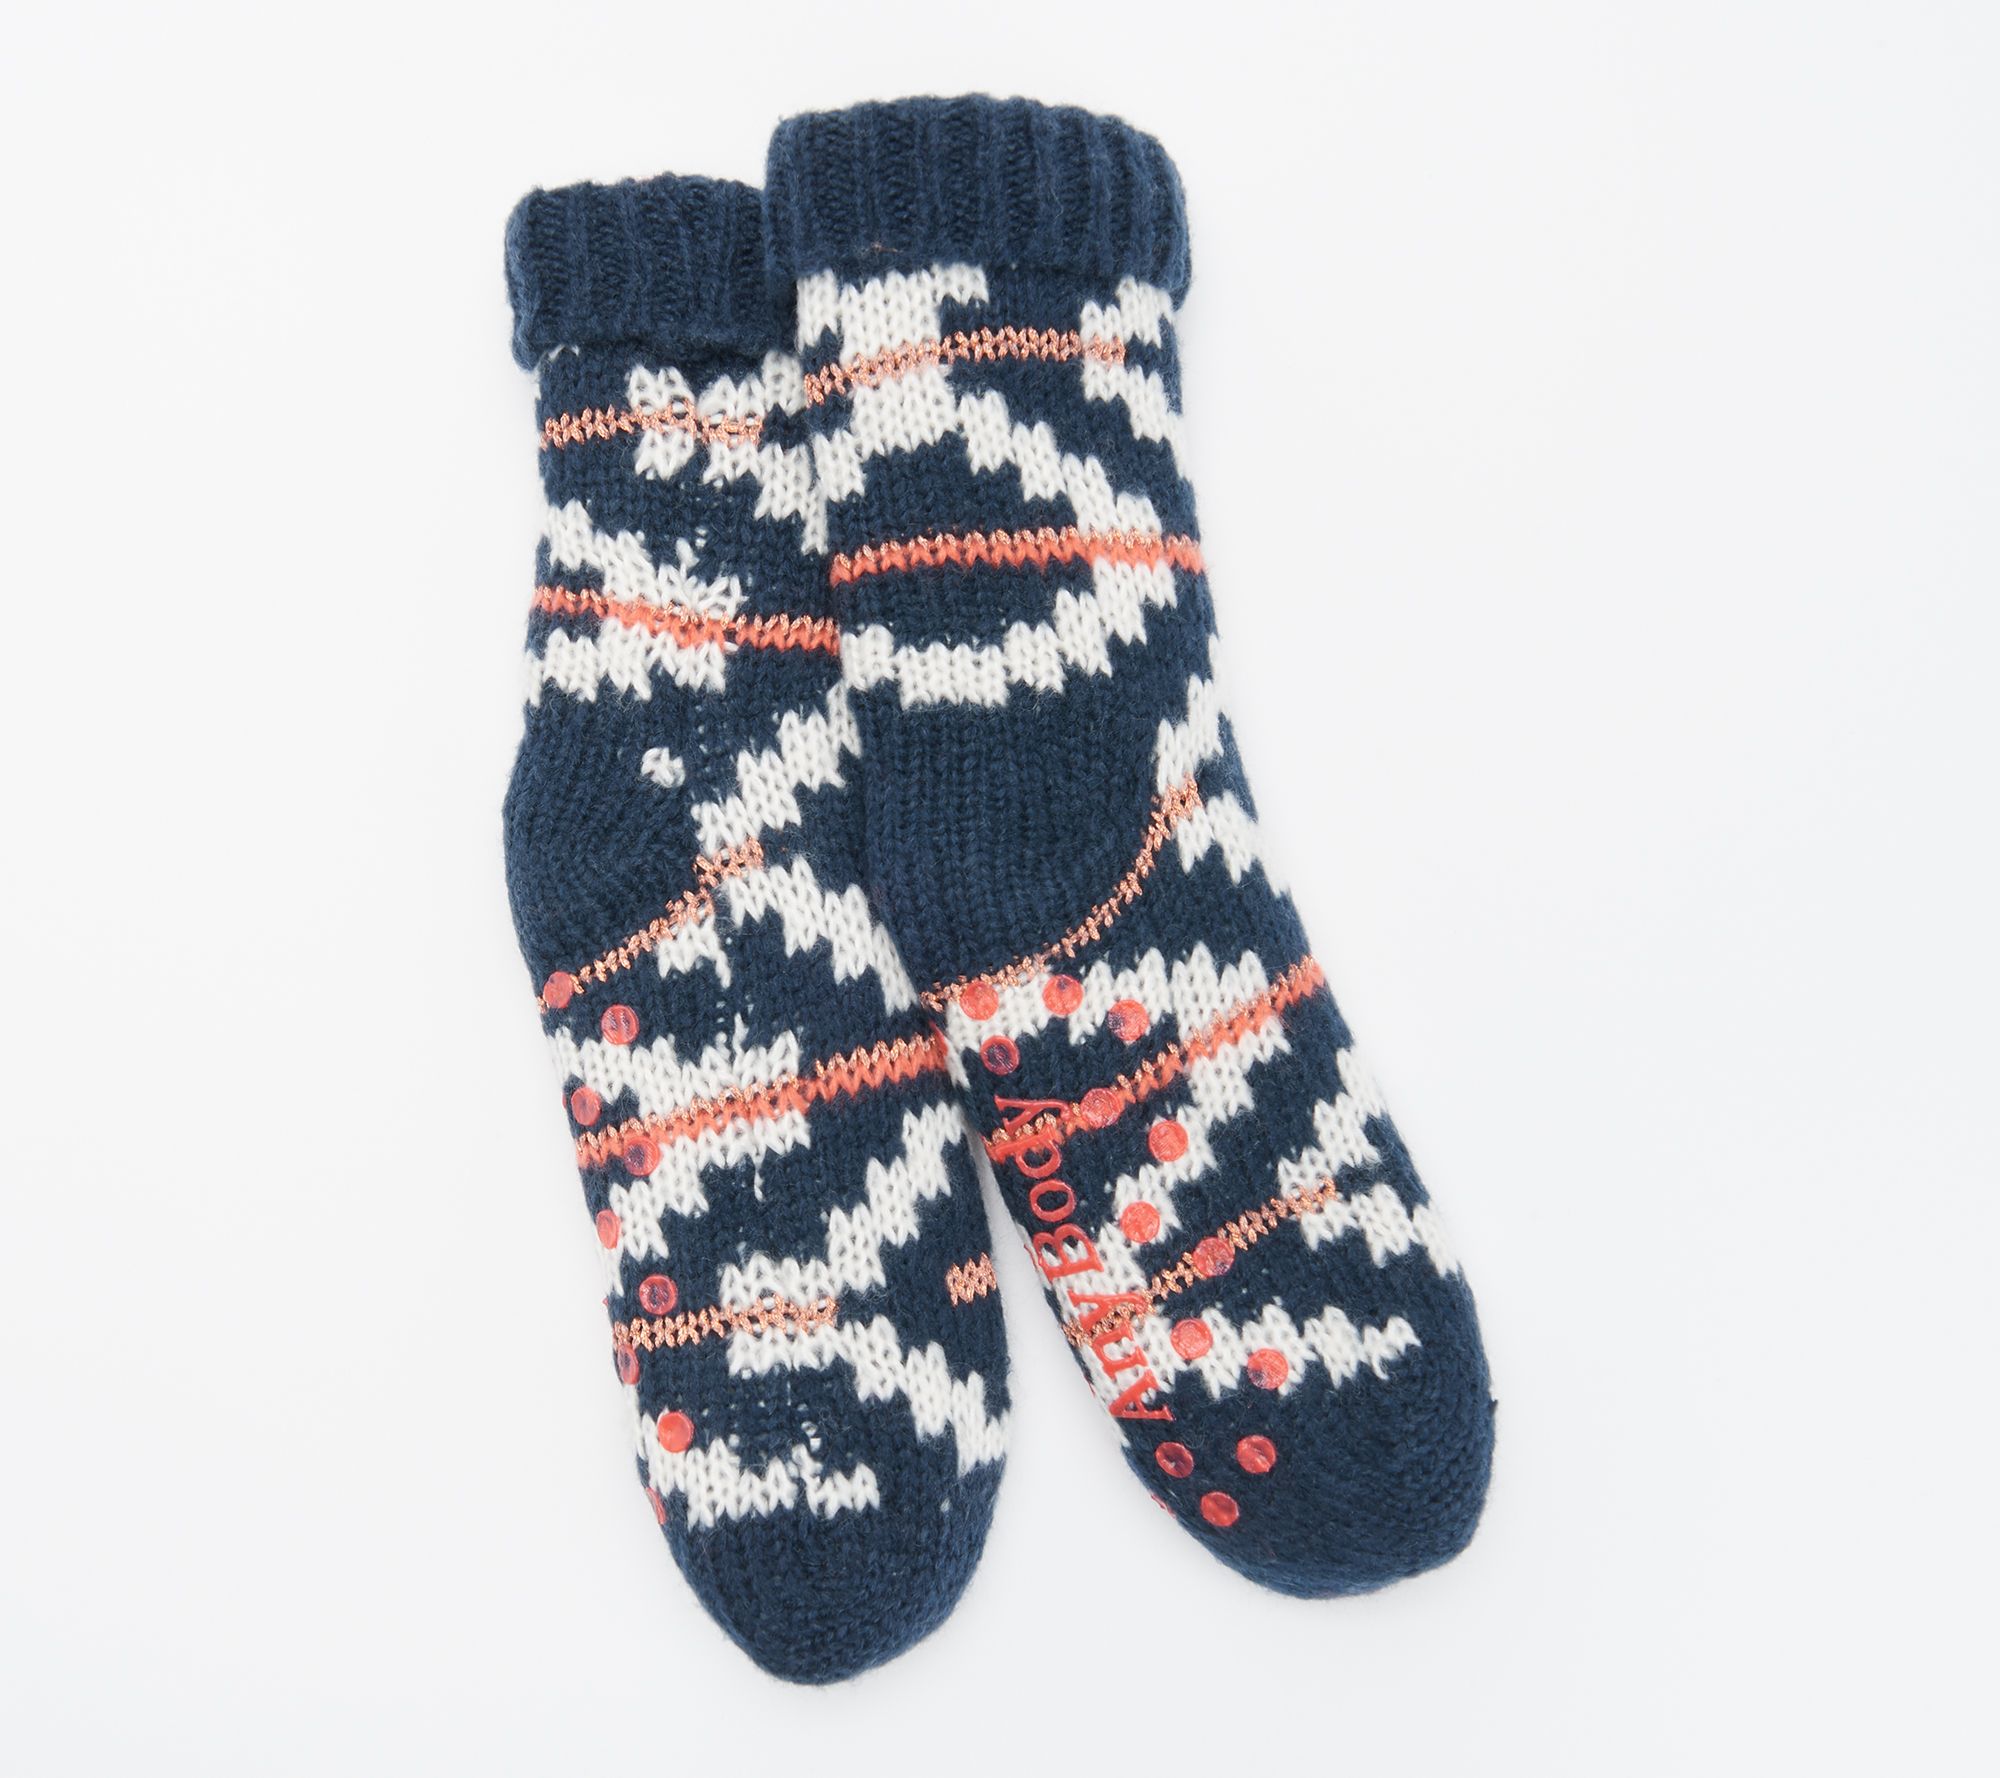 AnyBody Nordic Knit Socks - QVC.com